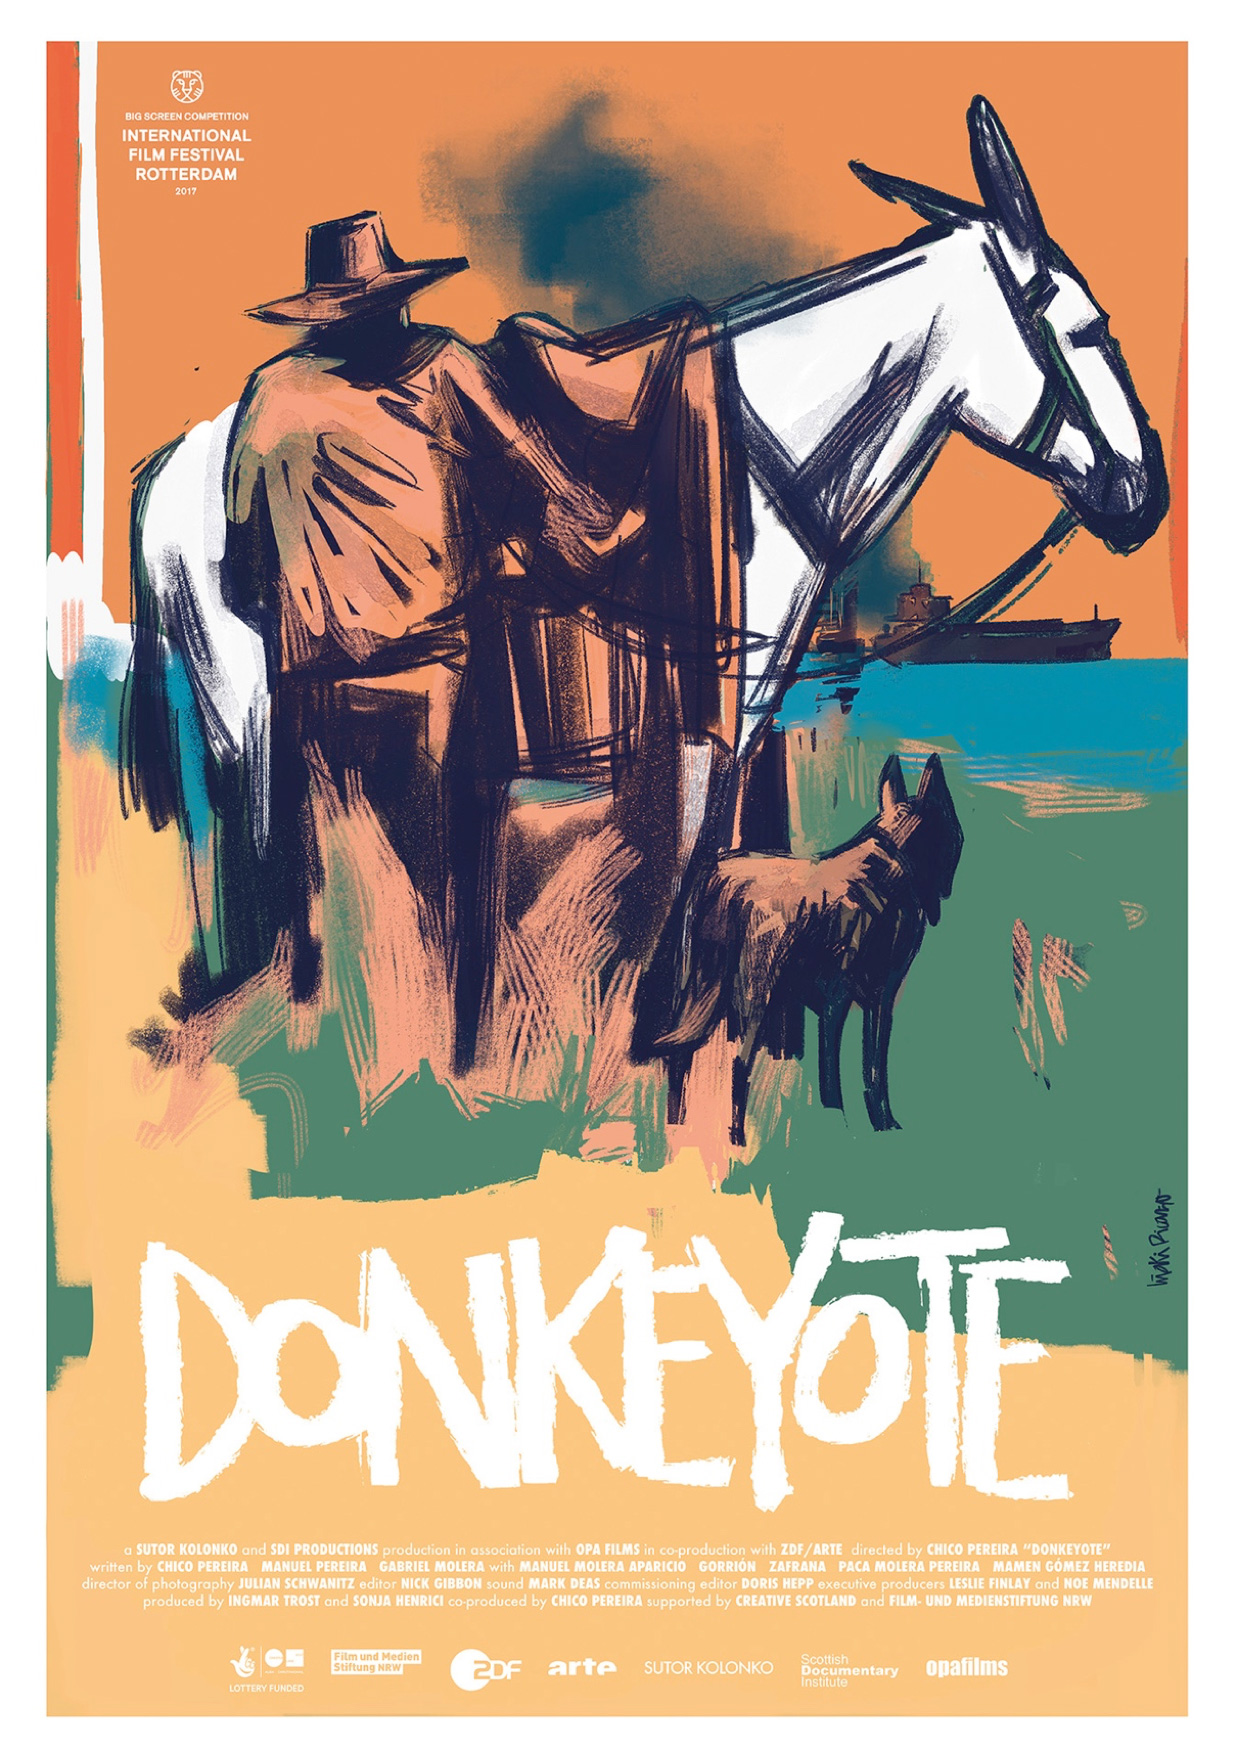 donkeyote poster – blue penguin film